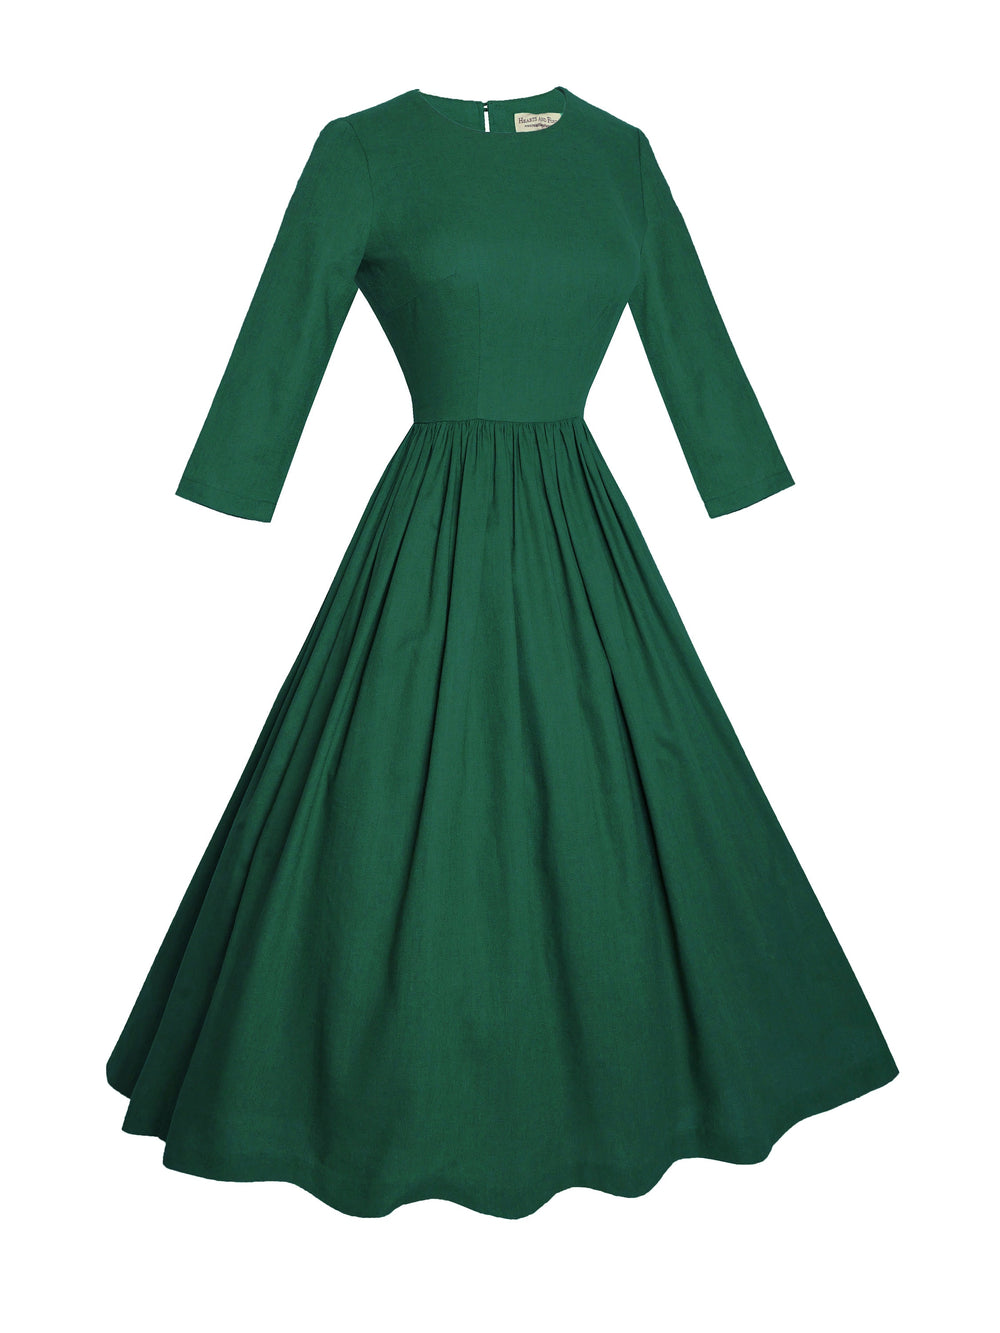 MTO - Marianne Dress in Forest Green Linen